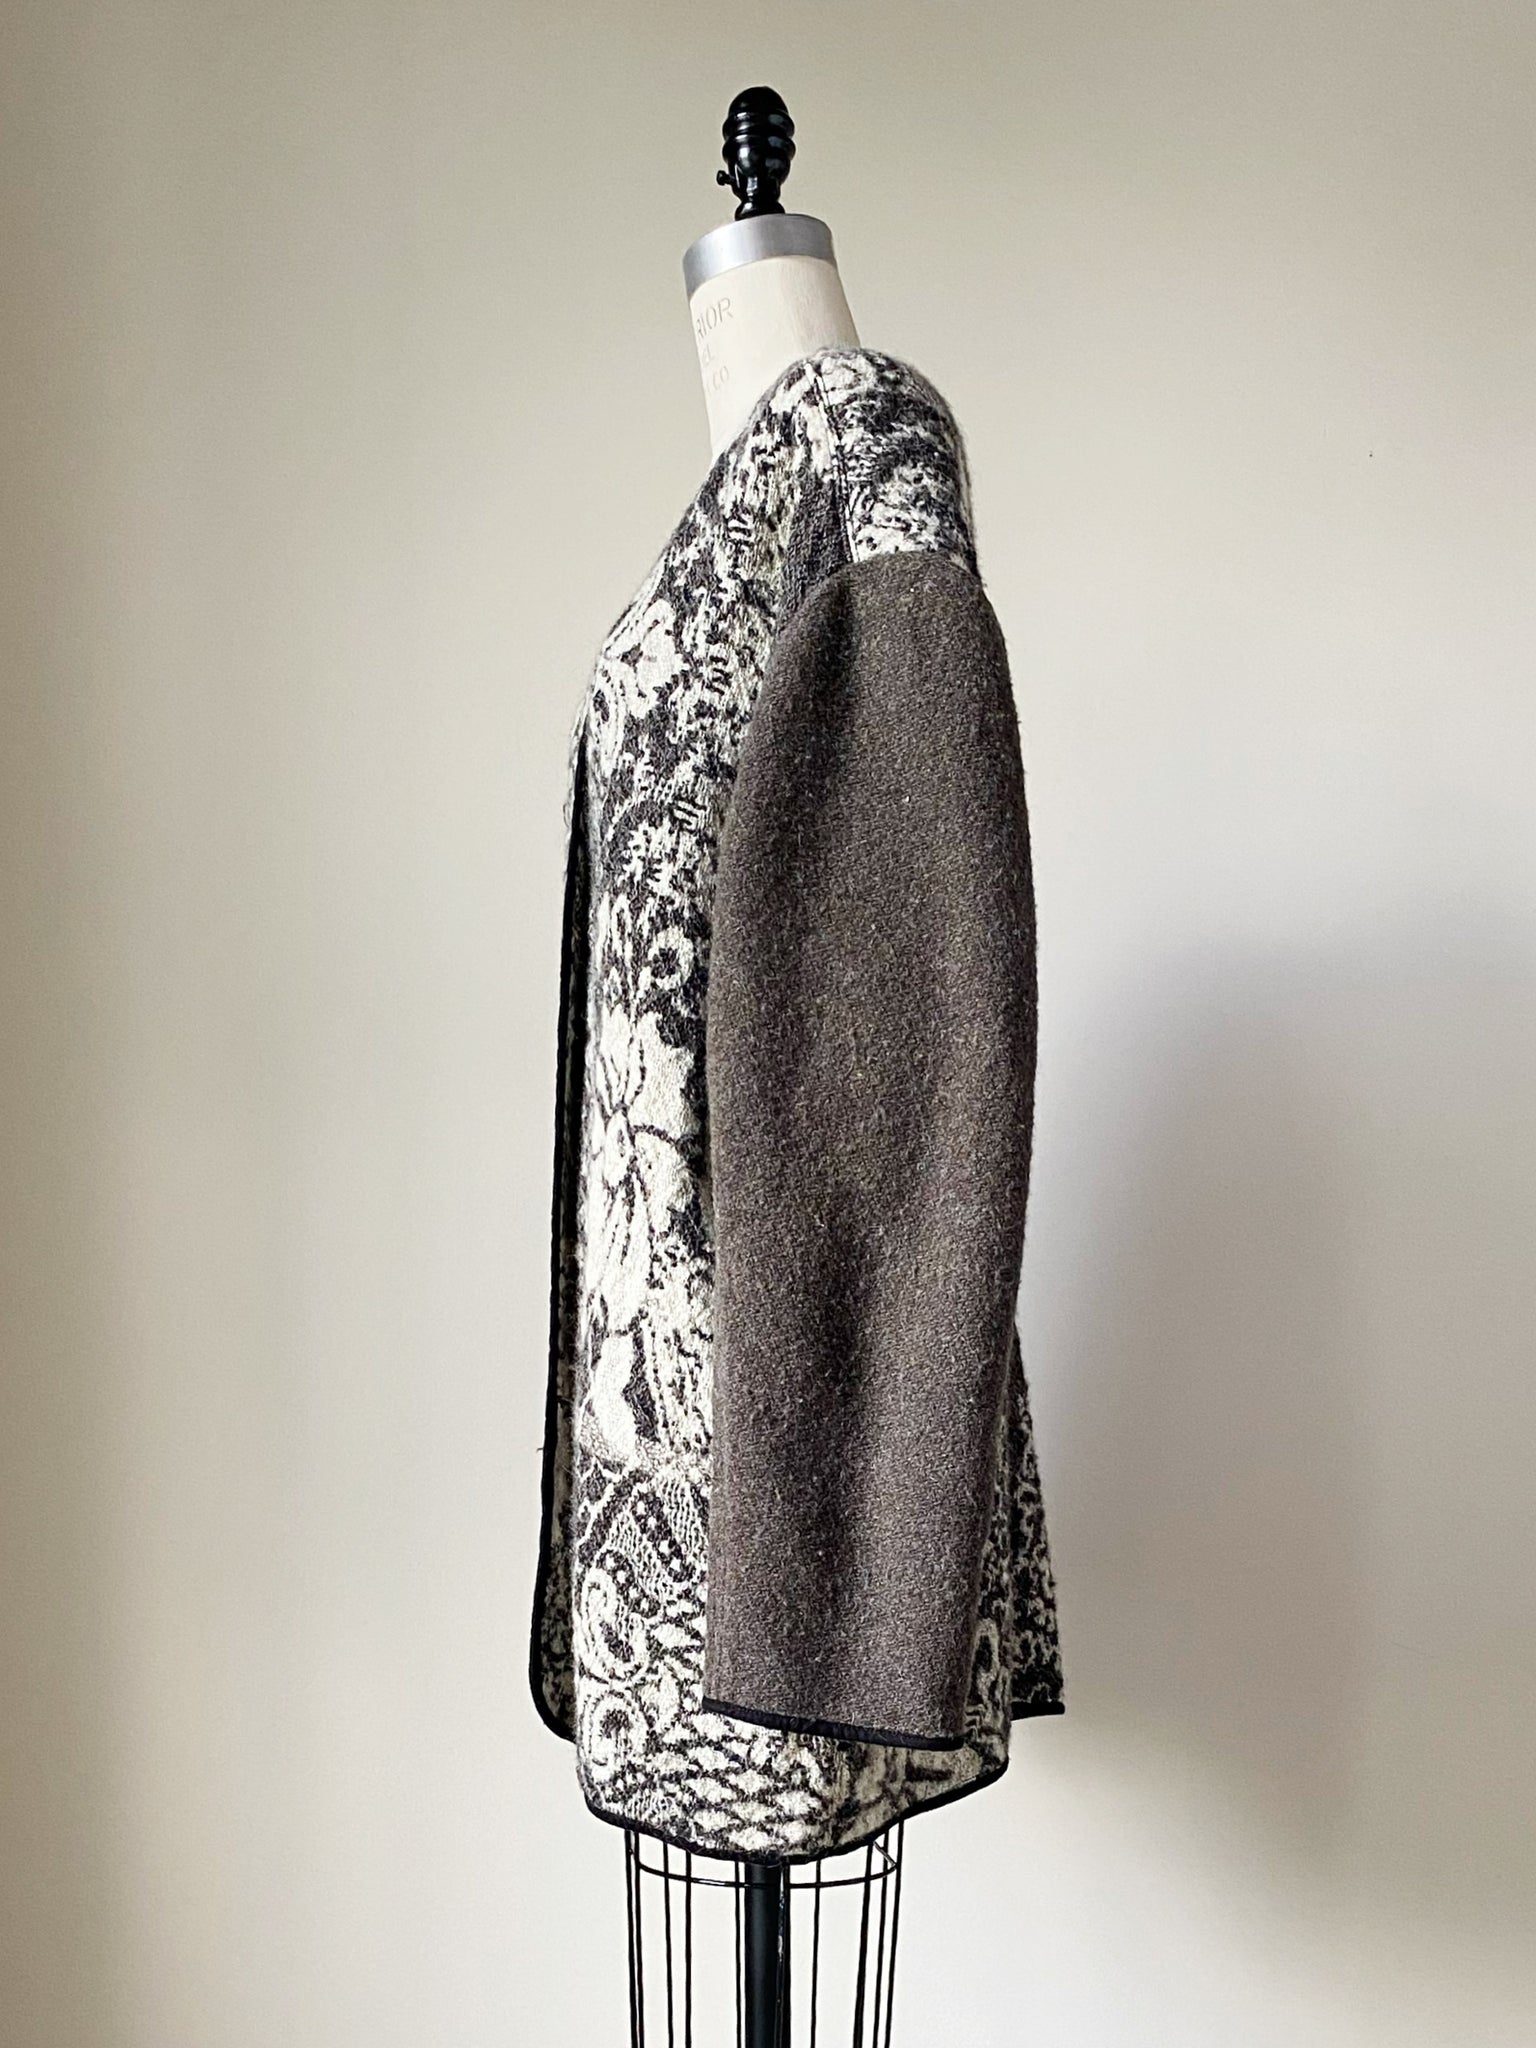 19th century rug pattern jacket #3